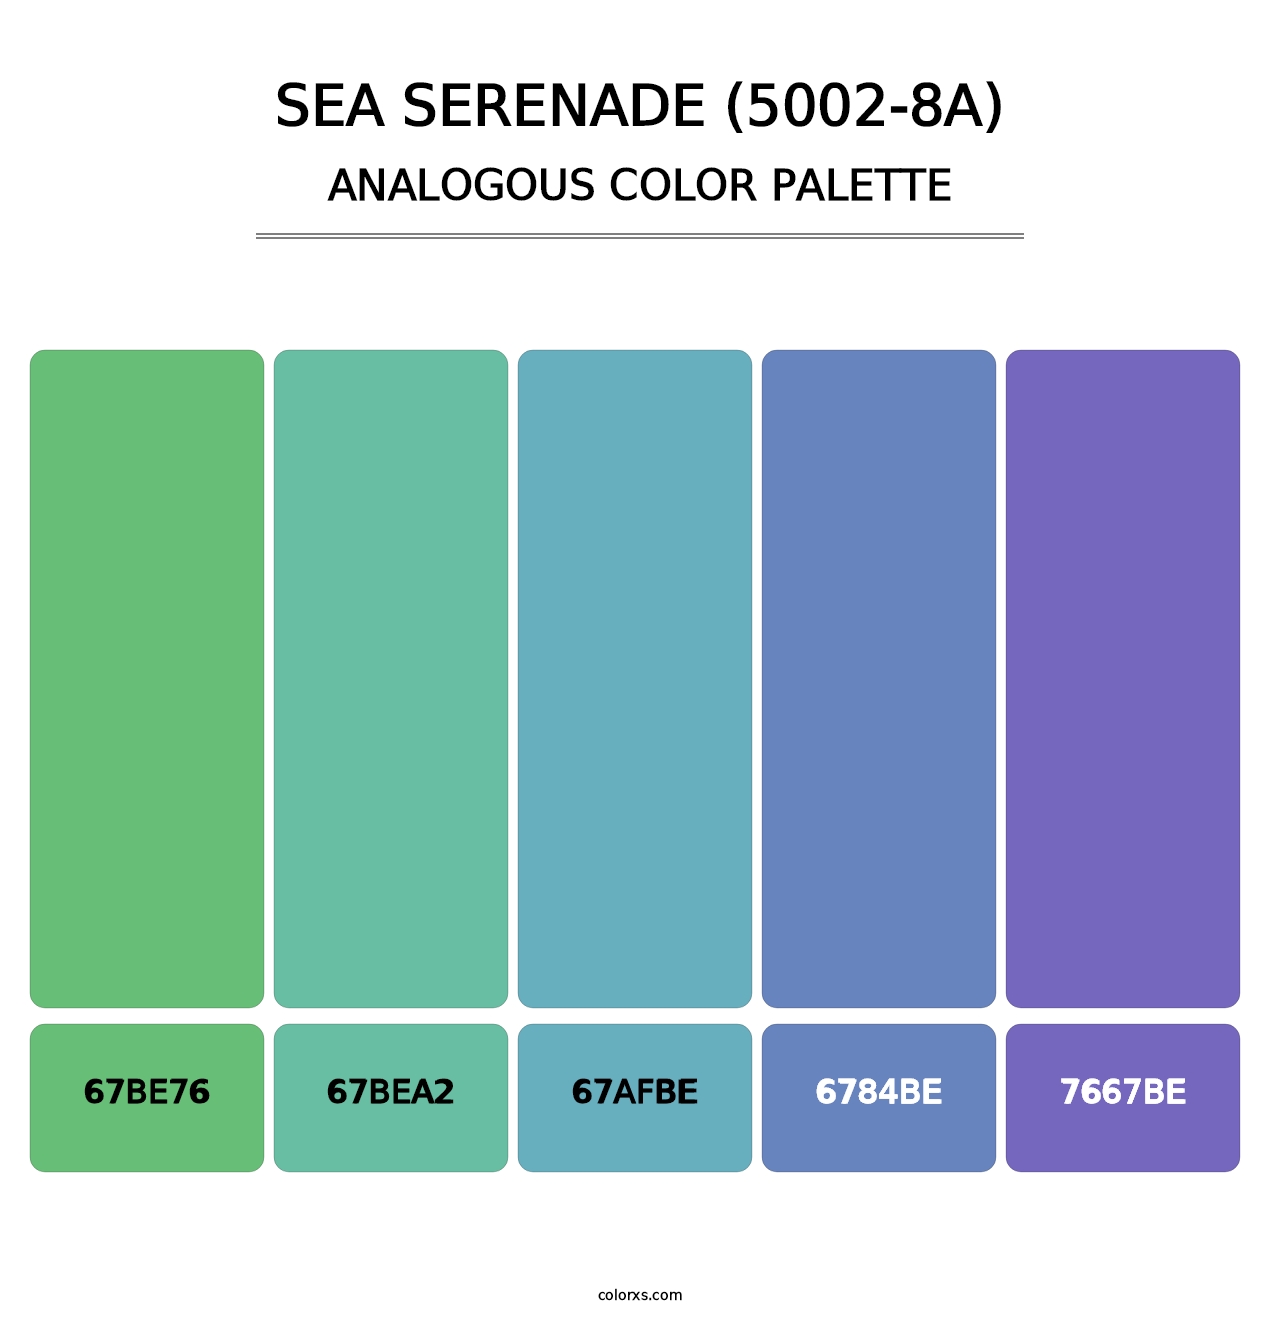 Sea Serenade (5002-8A) - Analogous Color Palette